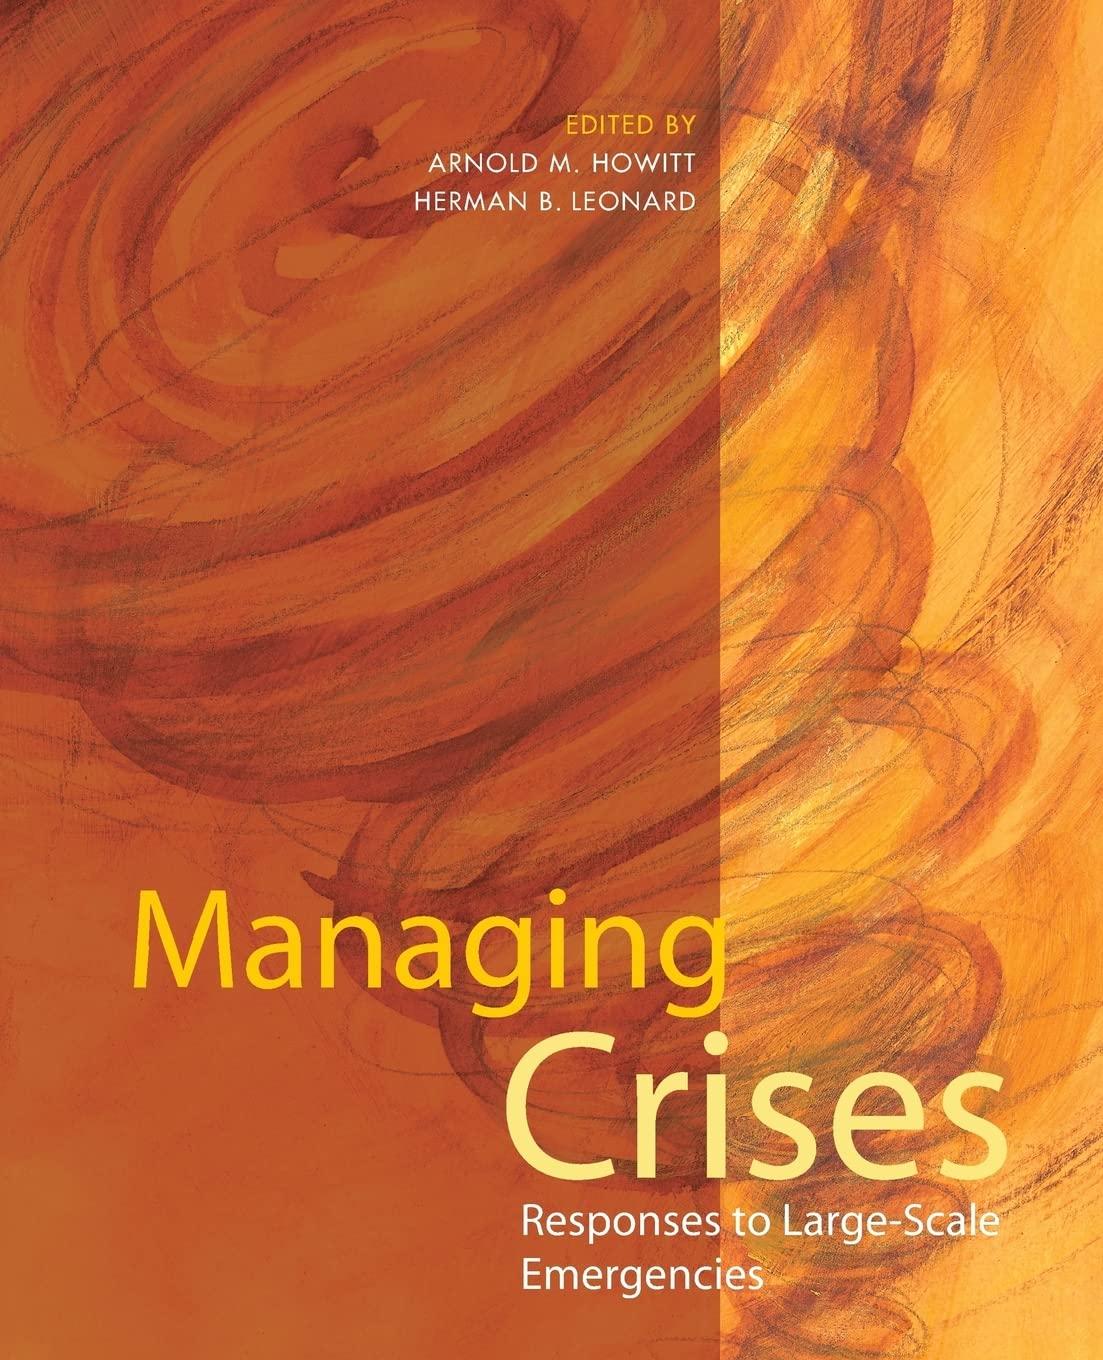 managing crises responses to large-scale emergencies 1st edition arnold m. howitt, herman b. leonard